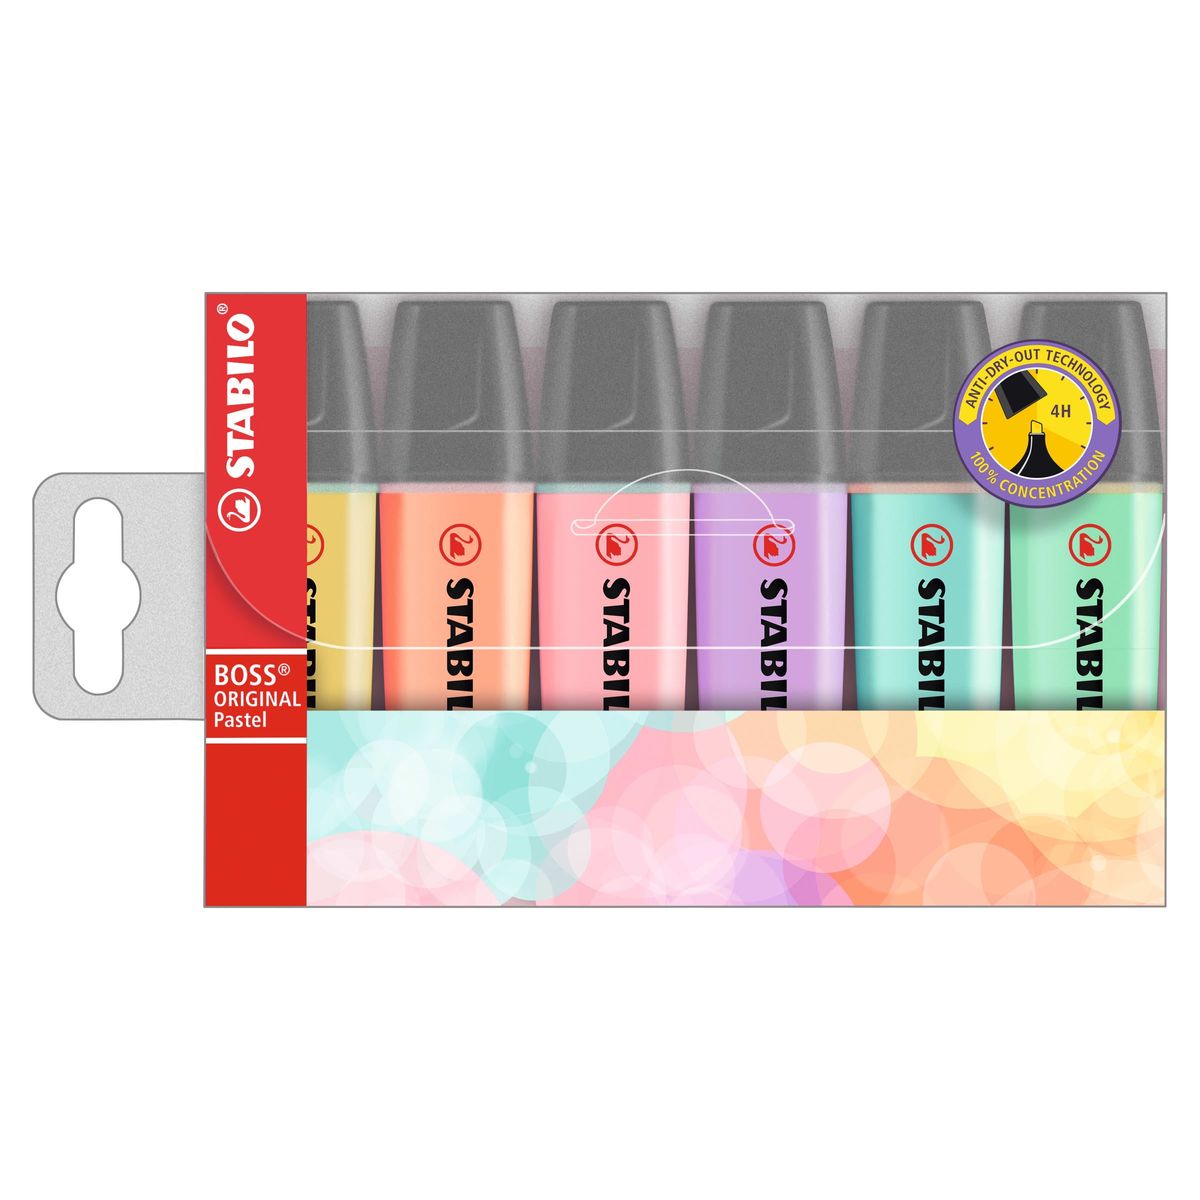 [RDY] [送料無料] STABILO BOSS ORIGINAL パステル蛍光ペン6色セット [楽天海外通販] | STABILO BOSS ORIGINAL Pastel Highlighter Set, 6-Color